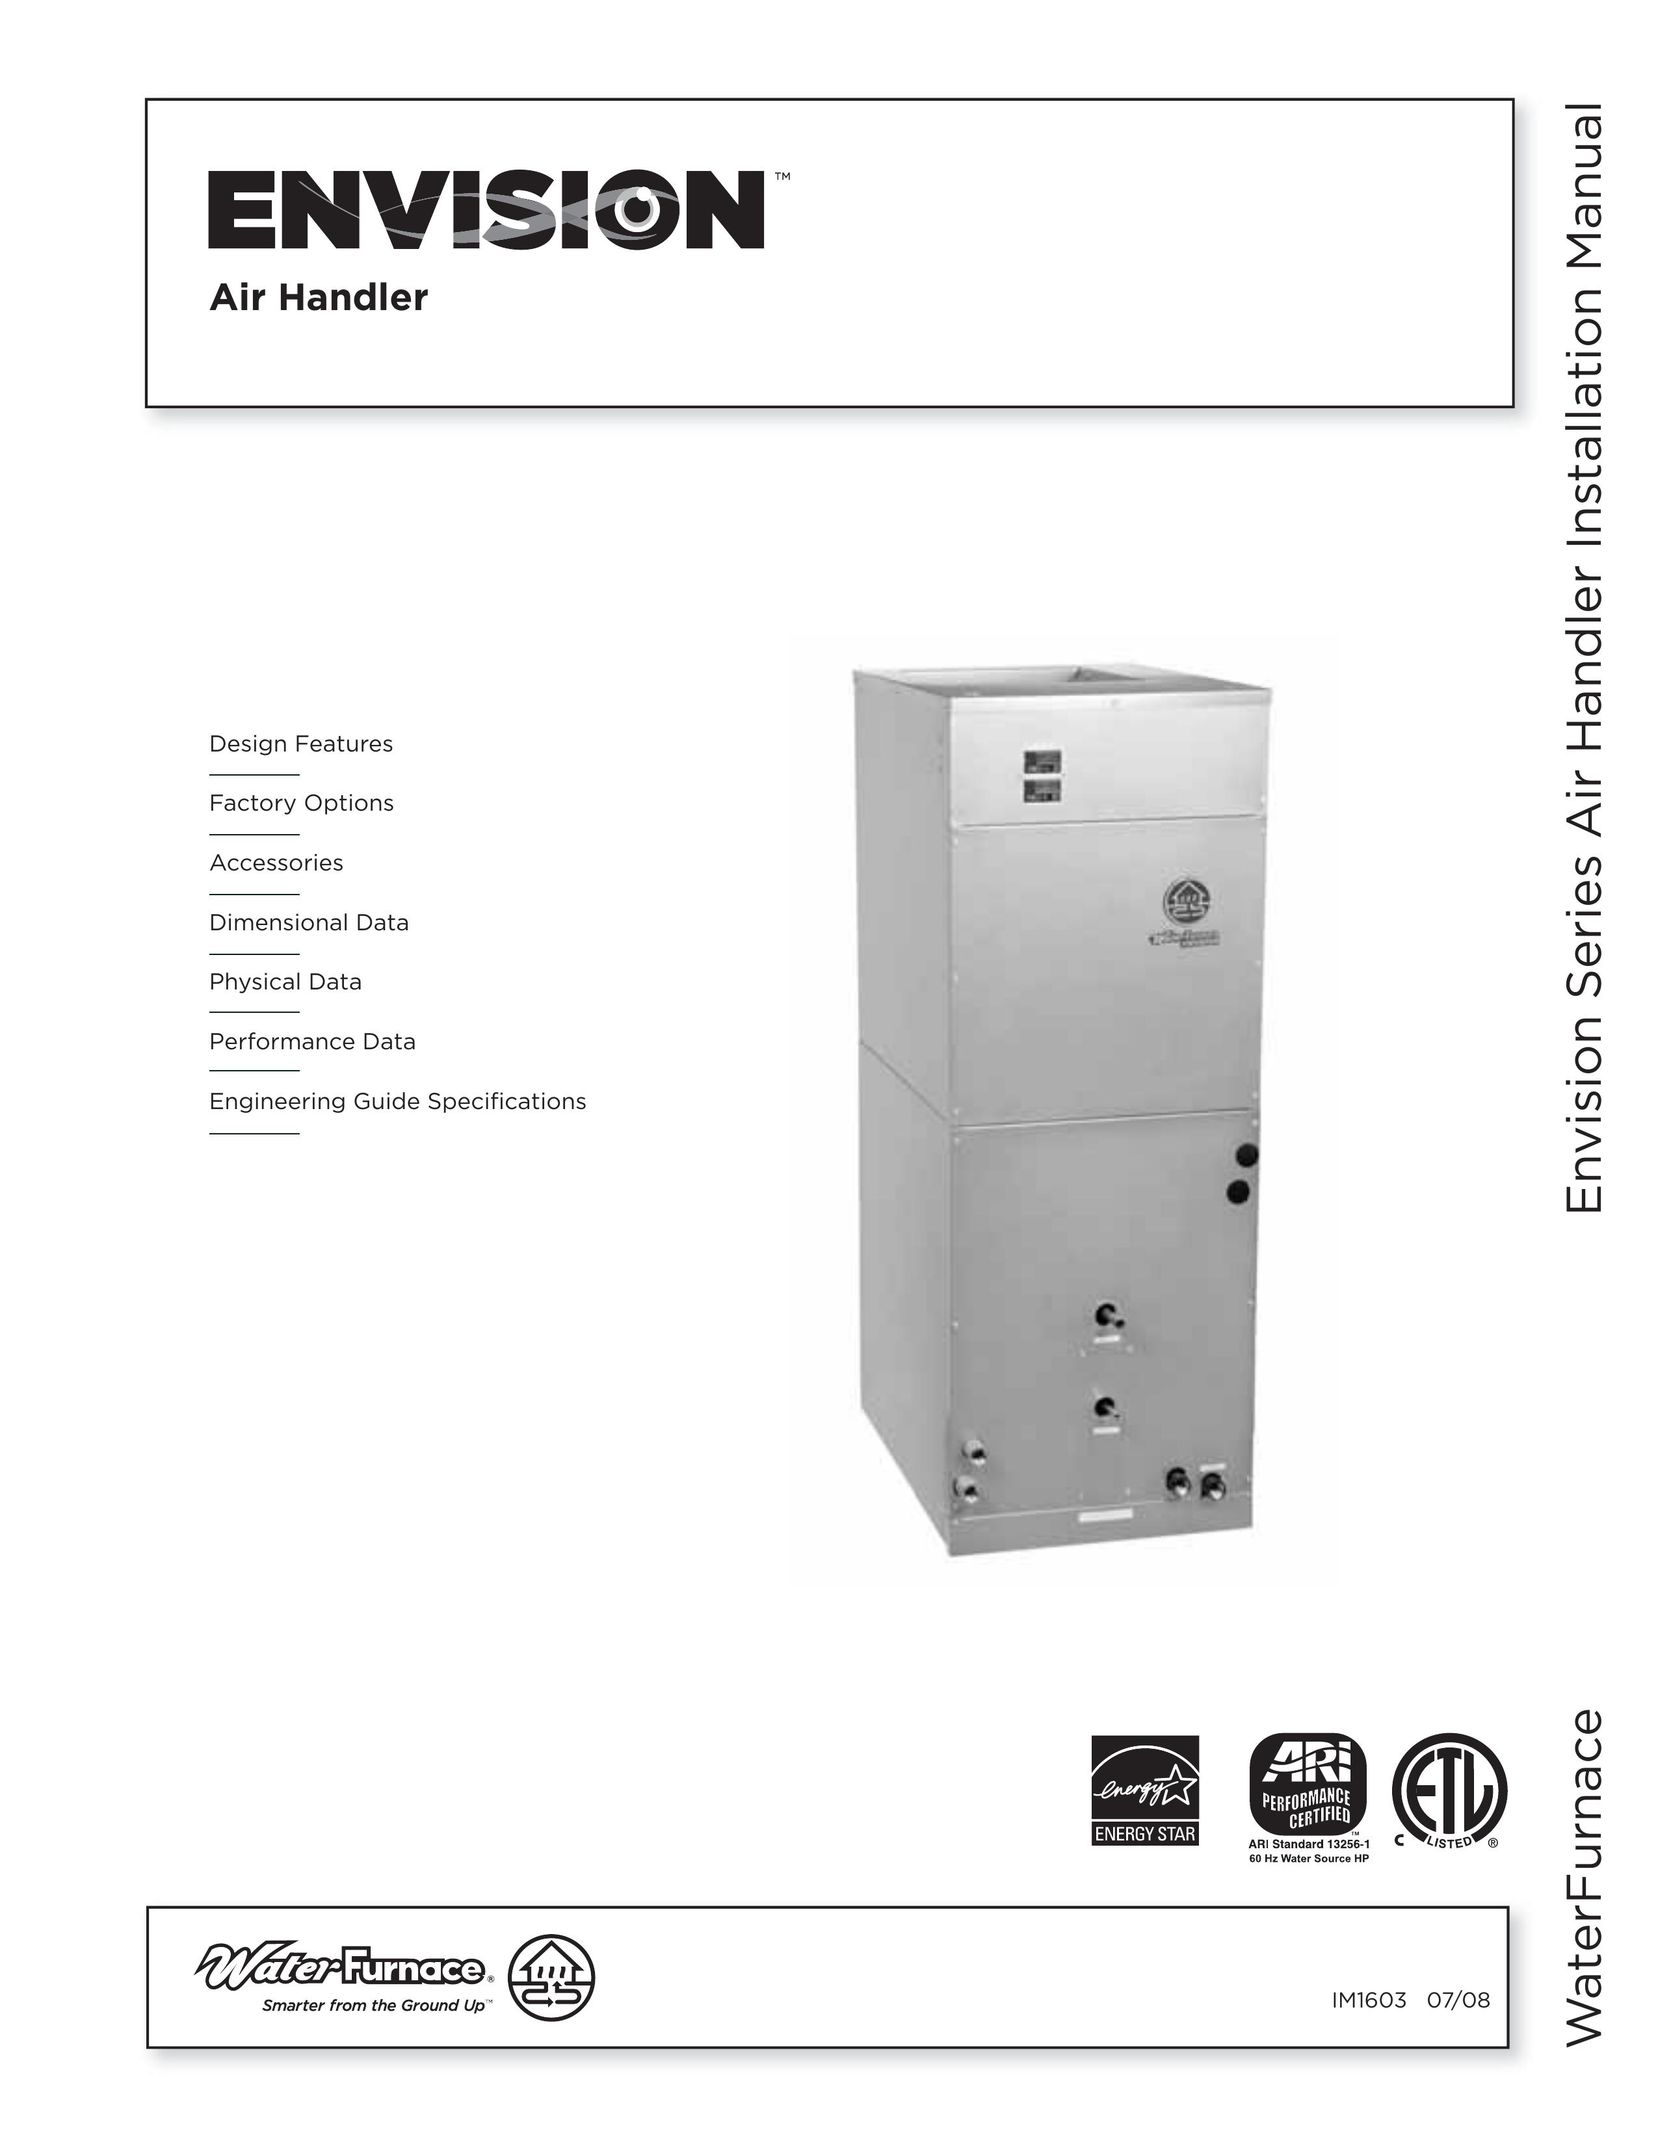 Envision Peripherals IM1603 Air Cleaner User Manual